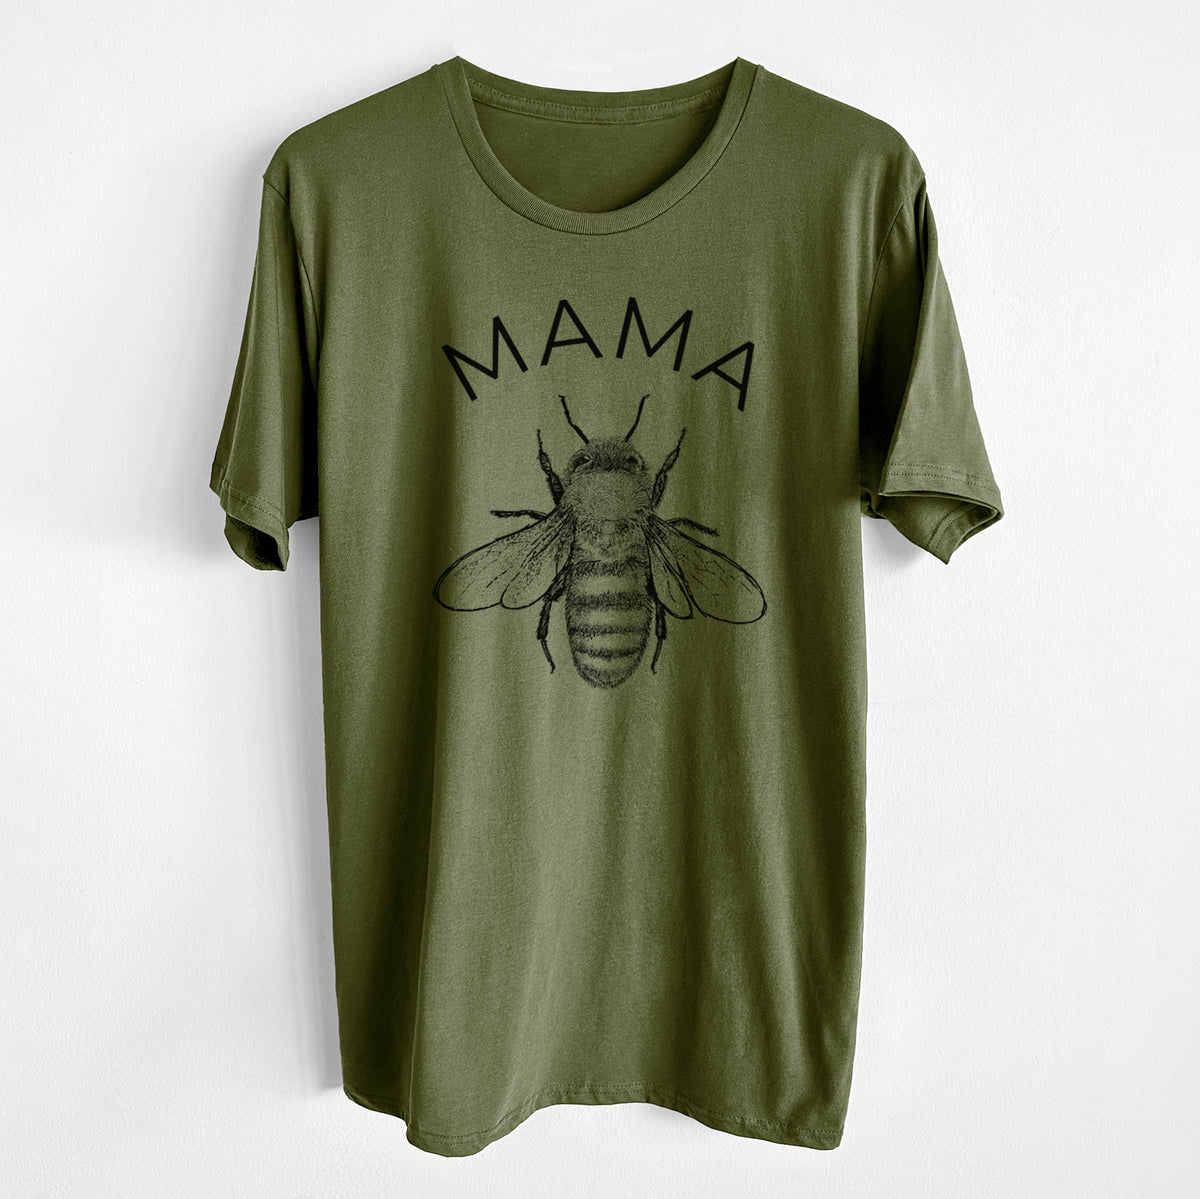 Mama Bee - Unisex Crewneck - Made in USA - 100% Organic Cotton